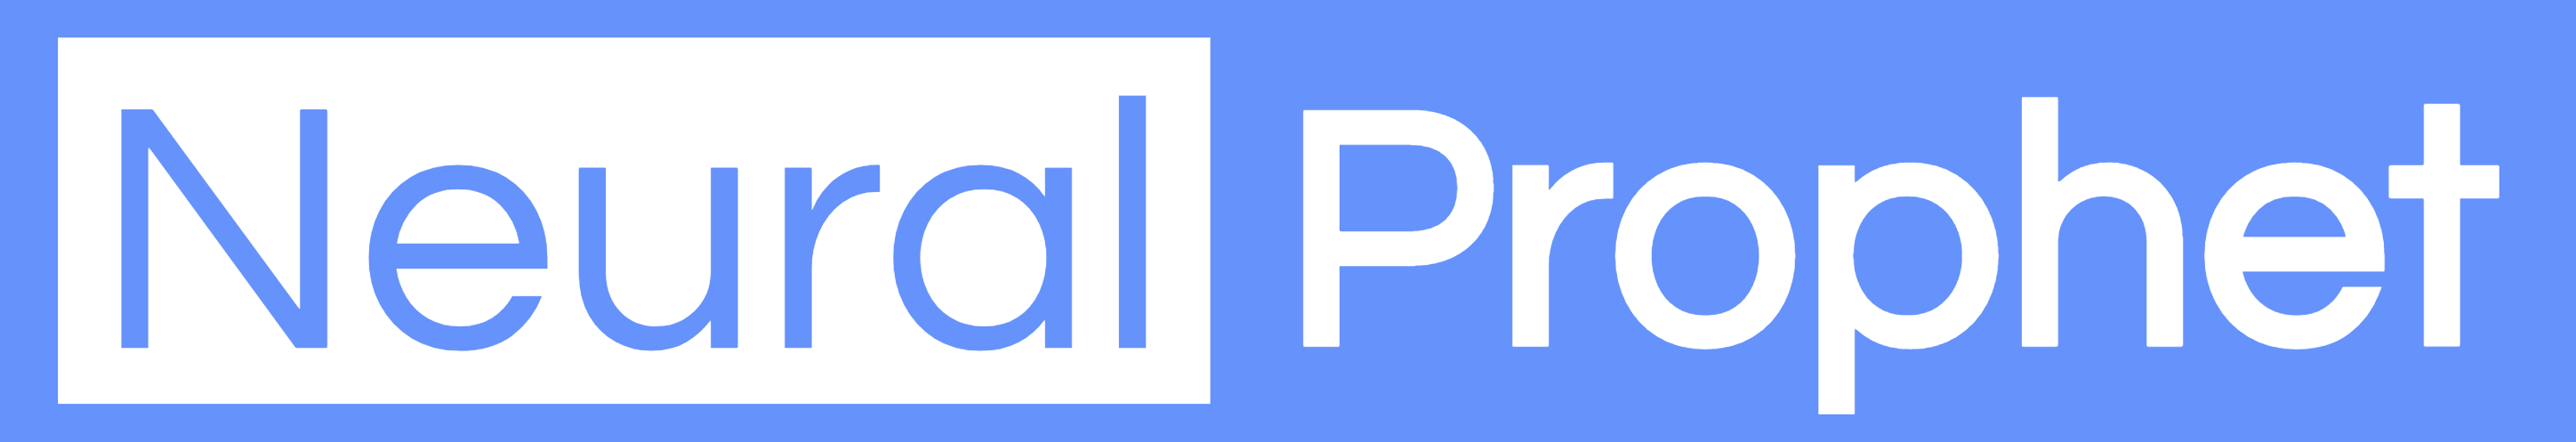 NP-logo-wide_cut